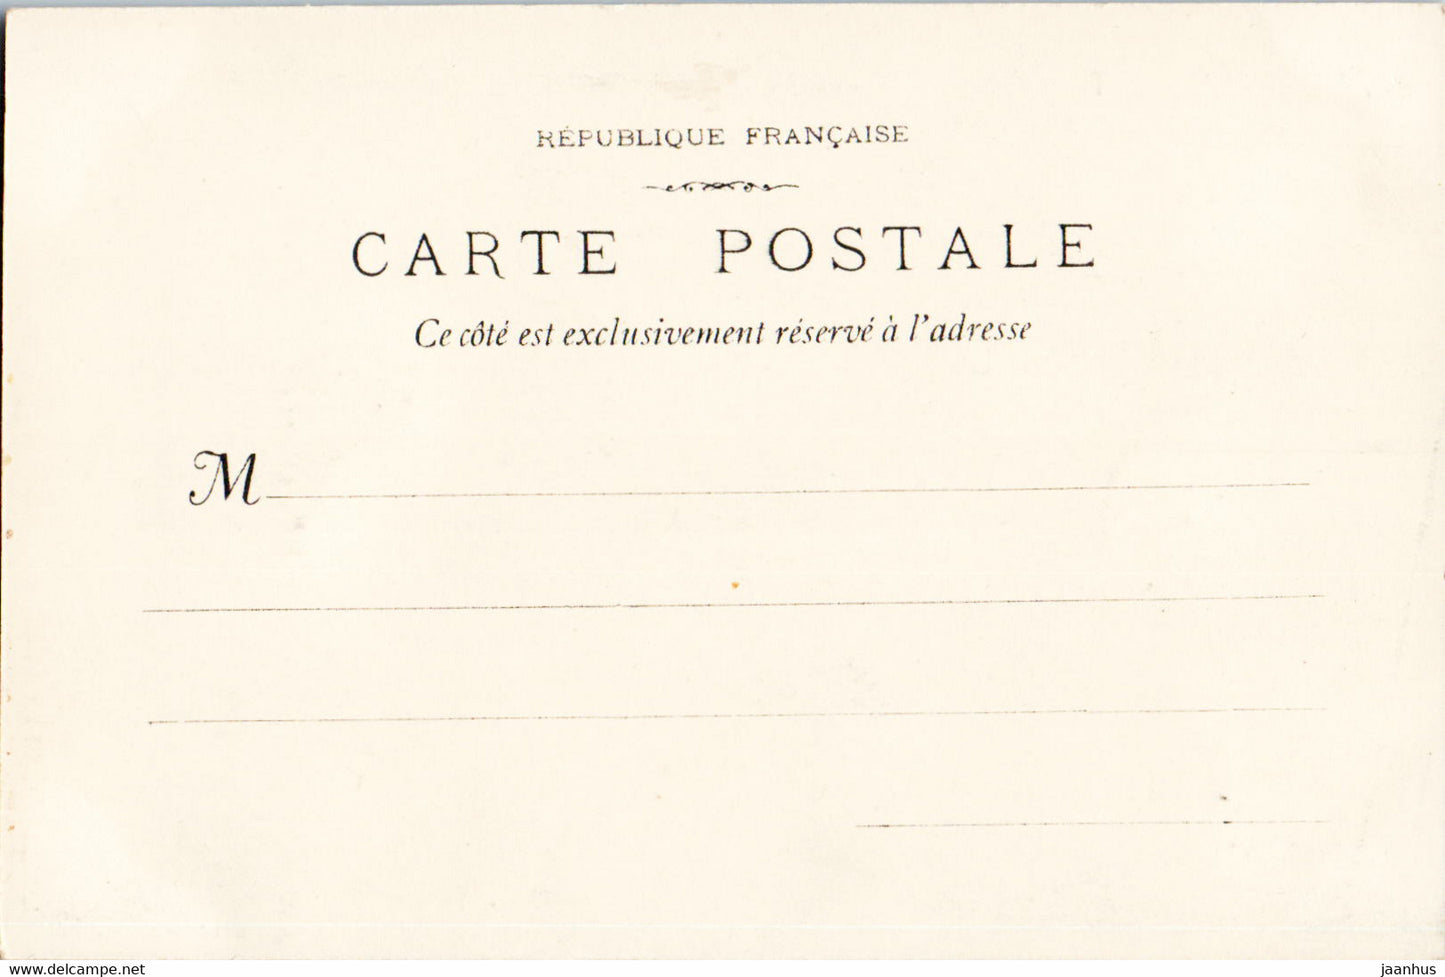 Orange - L'Arc de Triomphe - ancient - 711 - old postcard - France - unused